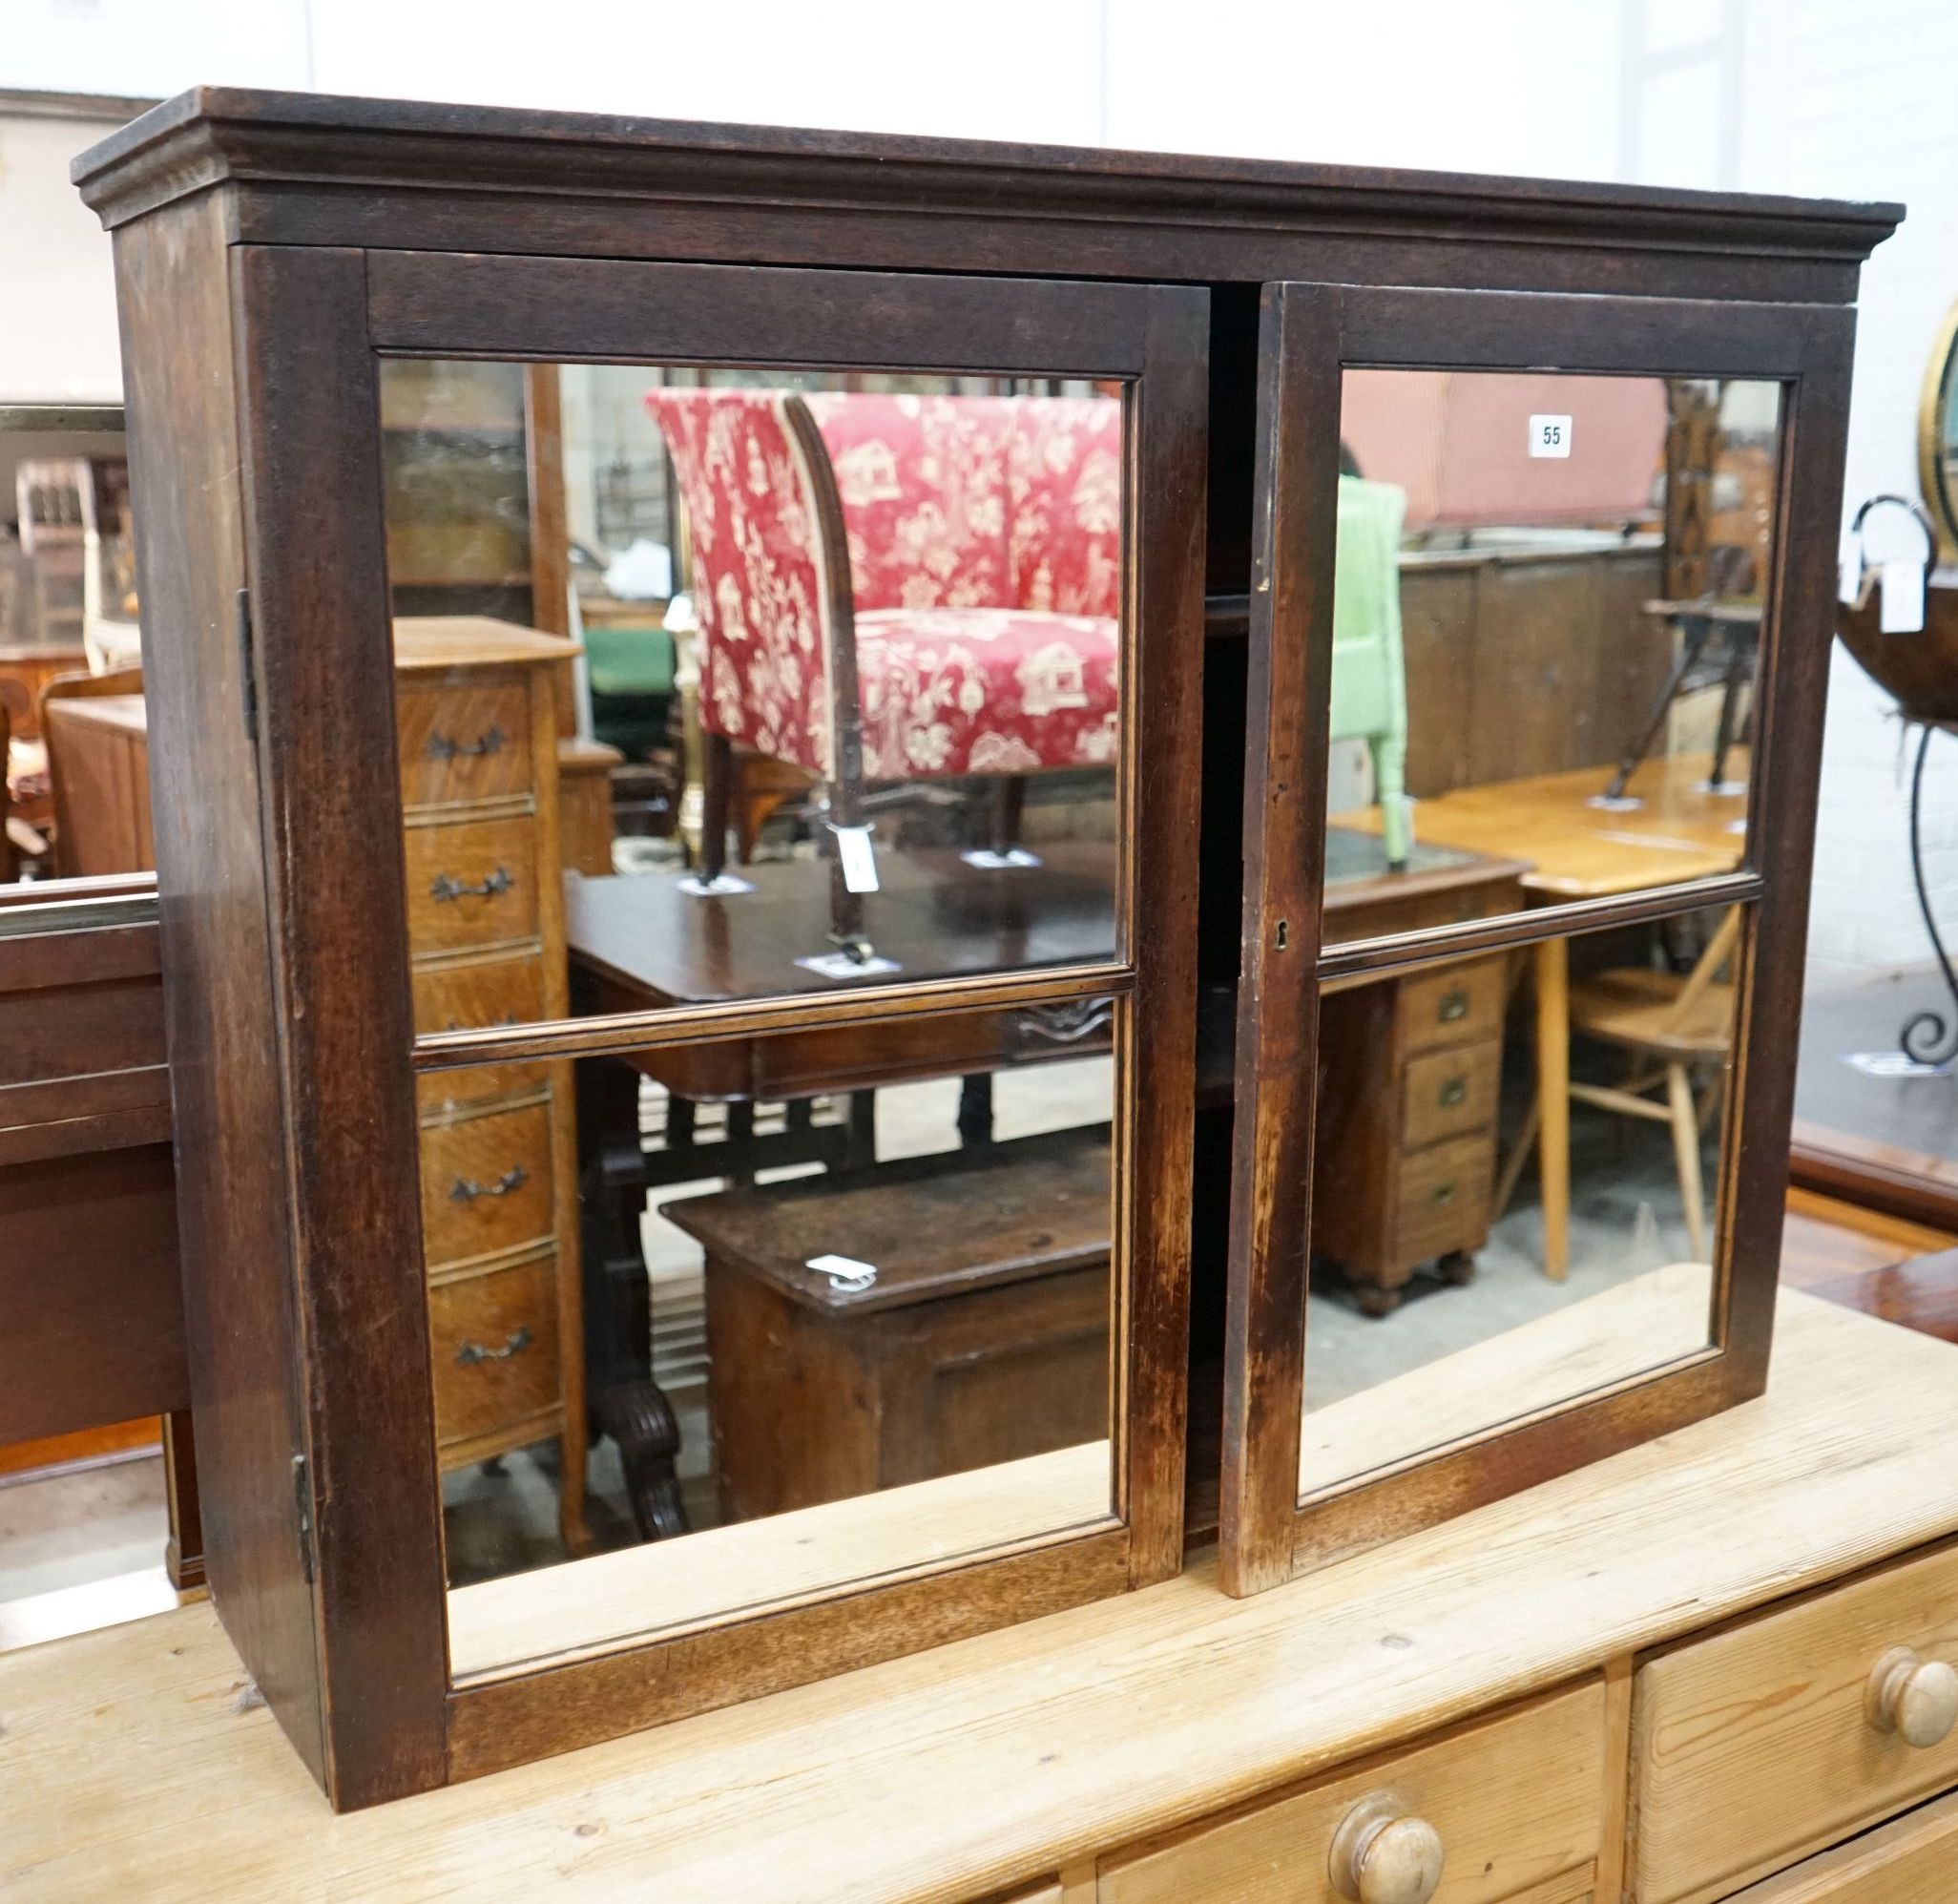 A Victorian mirrored two door wall cabinet, width 102cm, depth 27cm, height 77cm